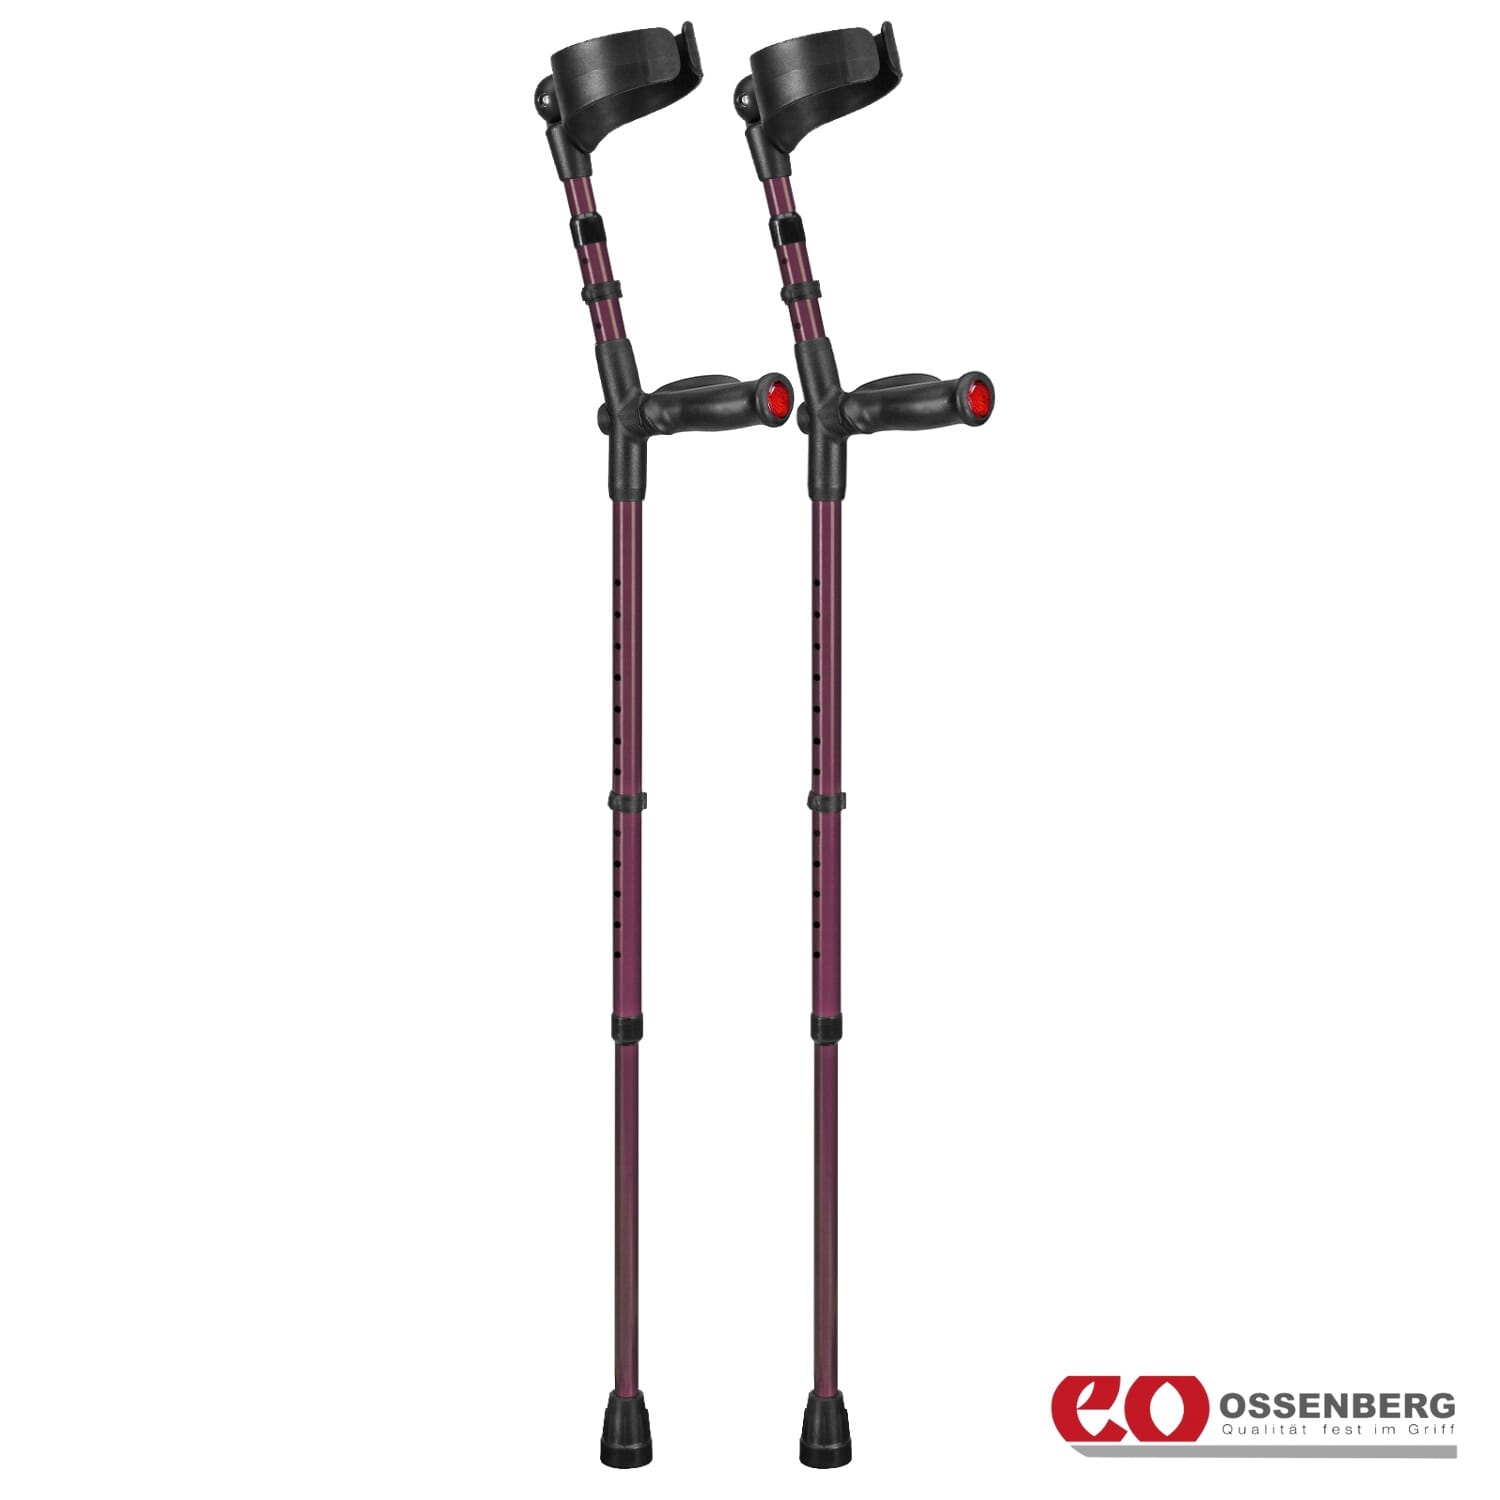 View Ossenberg Comfort Grip Double Adjustable Crutches Blackberry Pair information